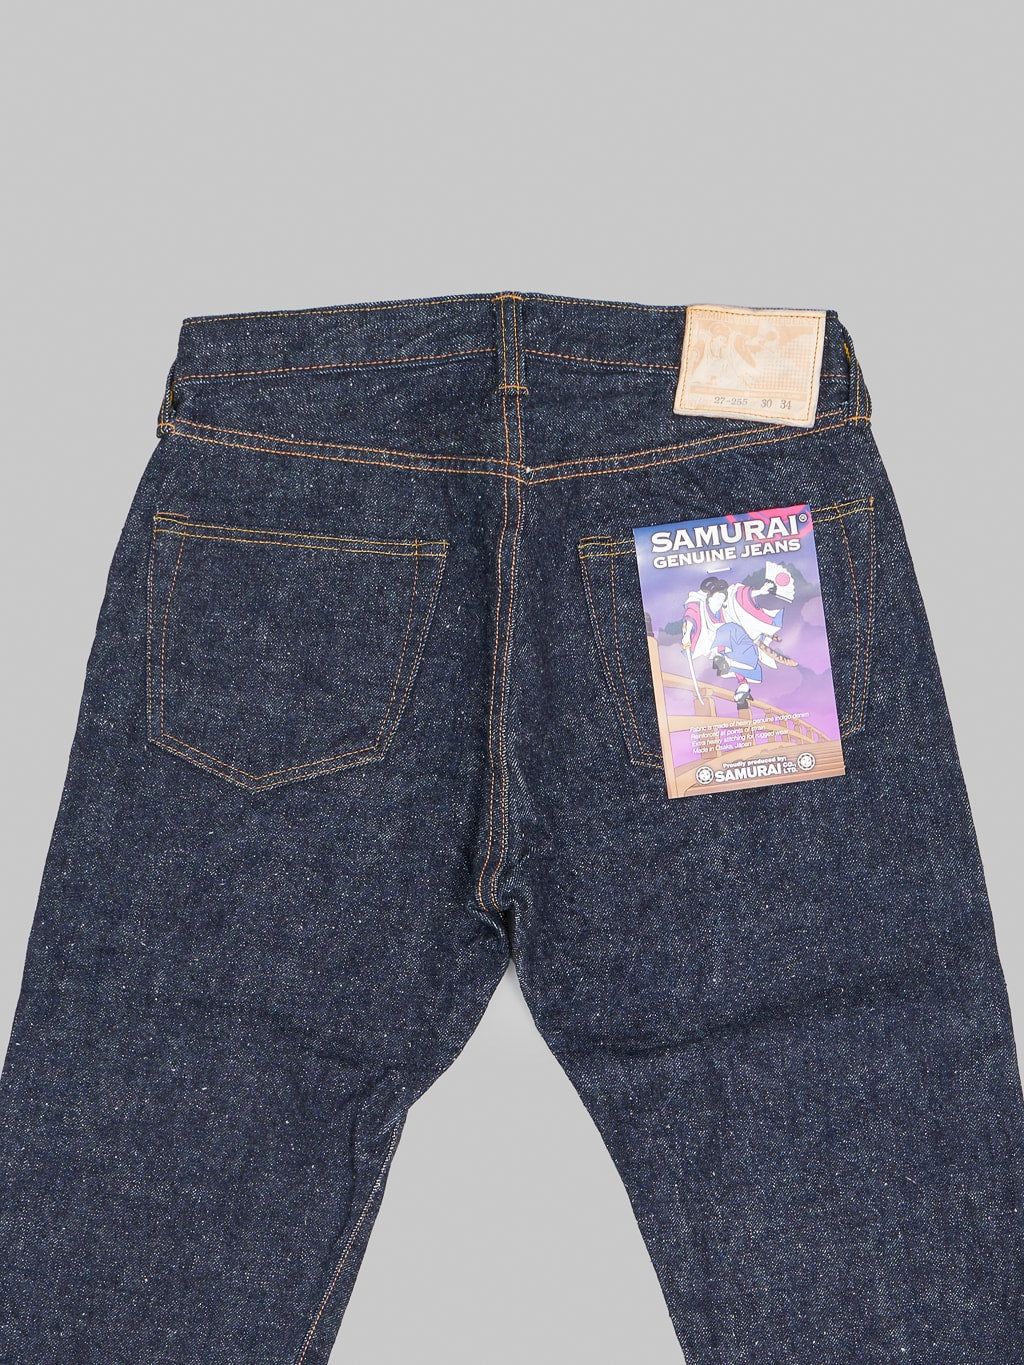 Samurai Jeans S0255XX Ushiwaka 15oz Slim Tapered jeans back pockets